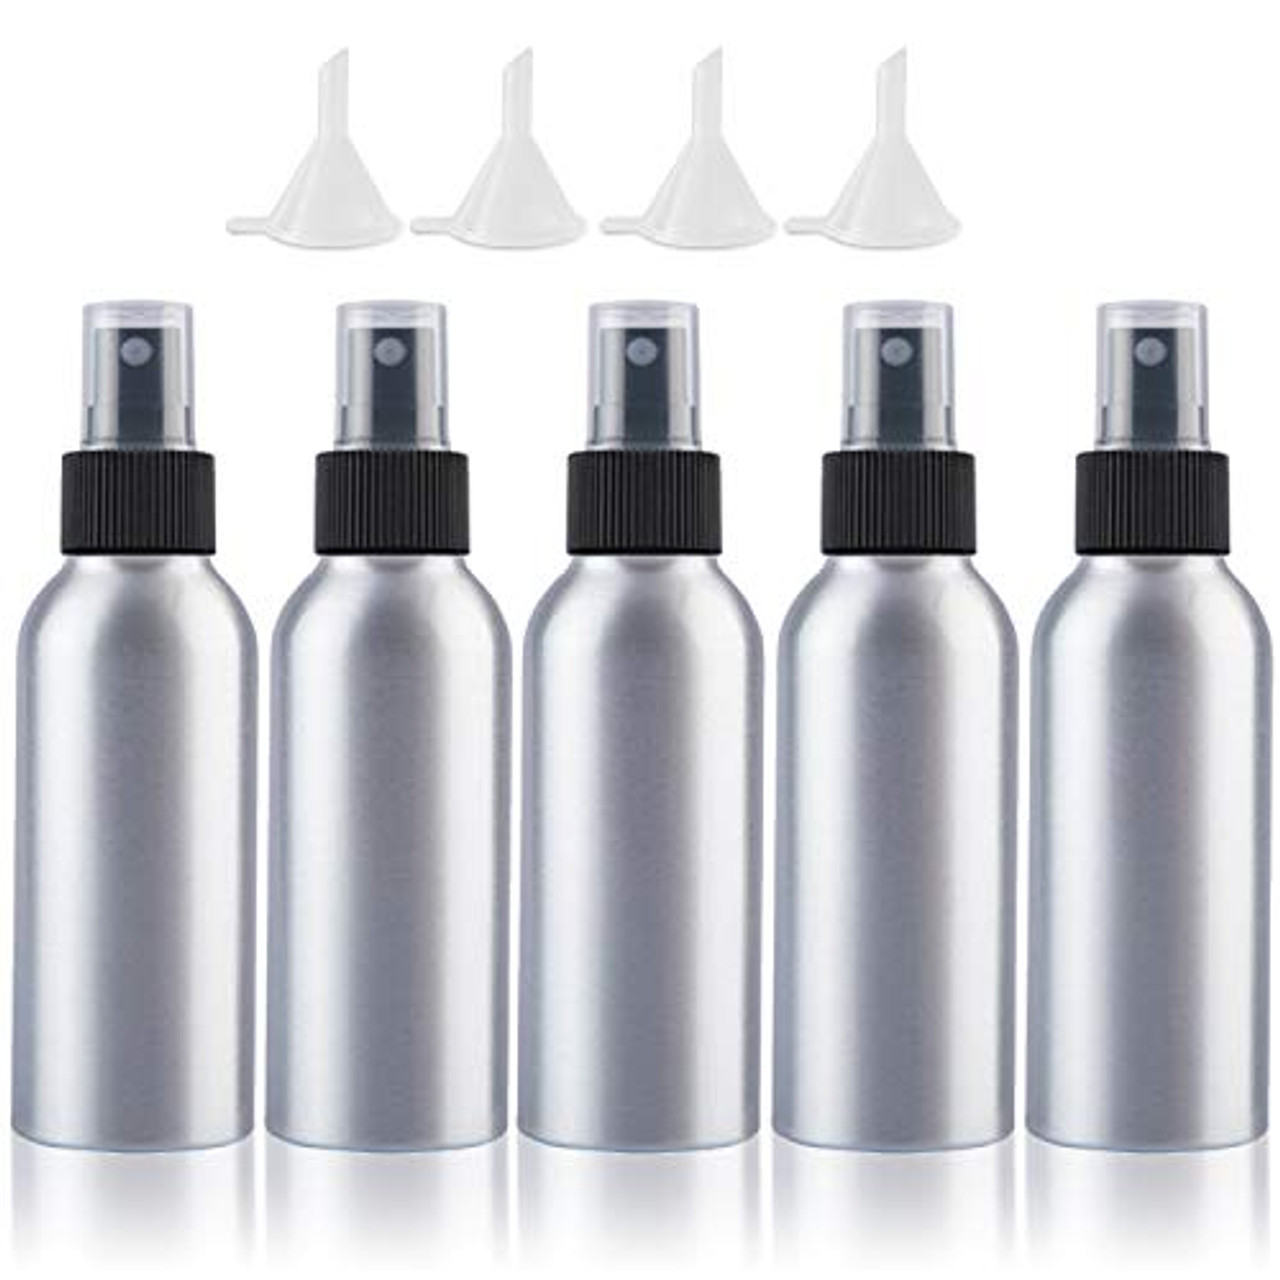 LOT OF 10 (Ten) Chanel Empty Glass Travel Size Makeup Sample Dram Jars  Bottles $29.95 - PicClick